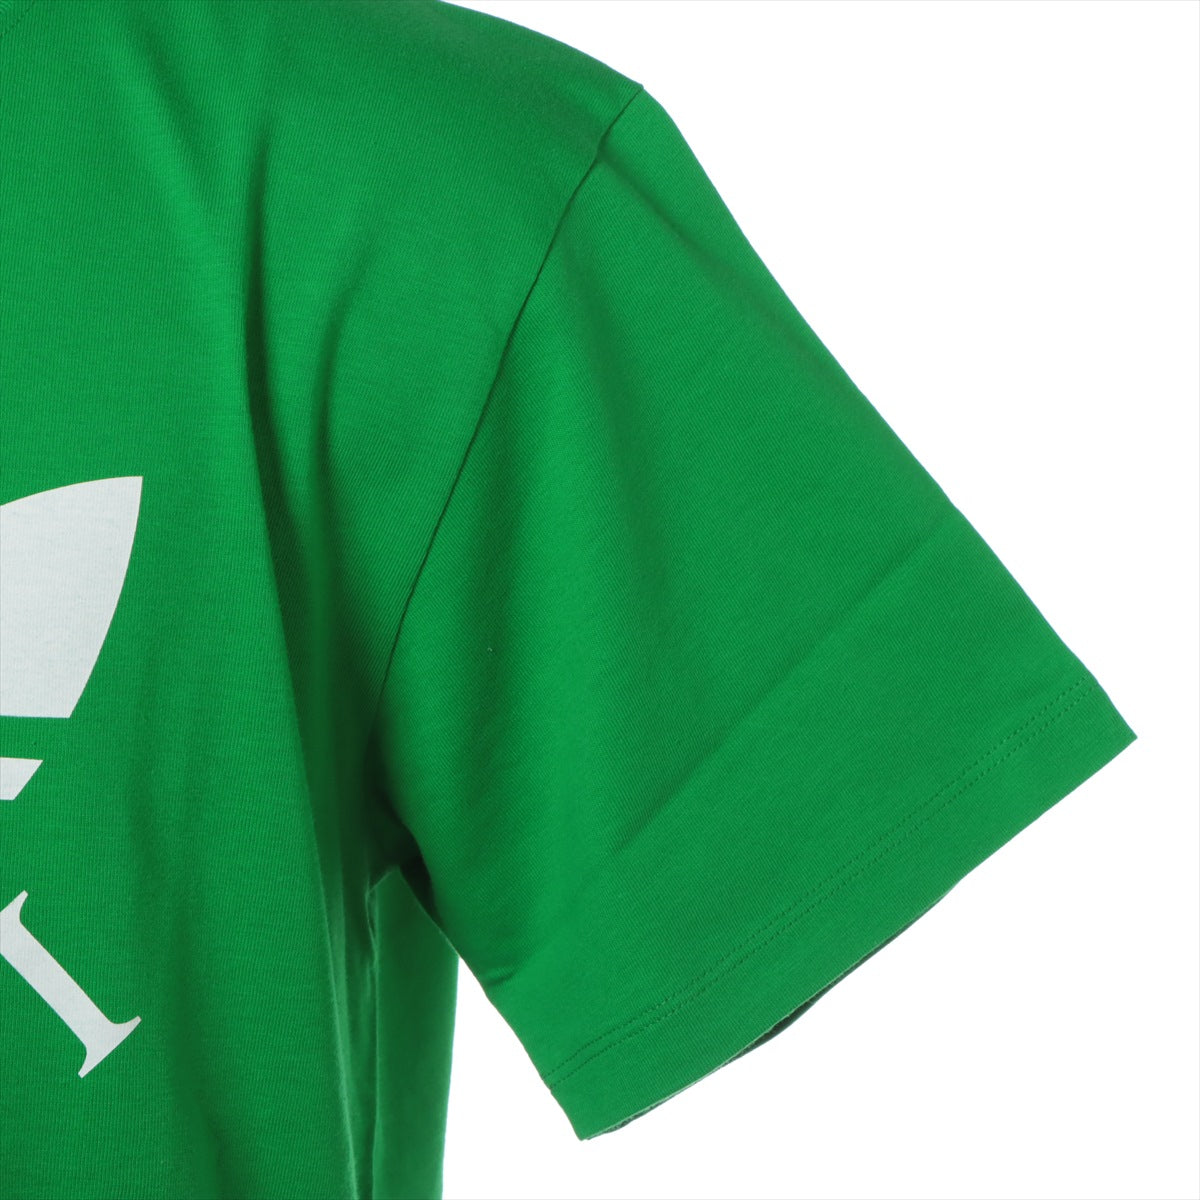 Gucci x adidas Cotton T-shirt XS Men's Green  717422